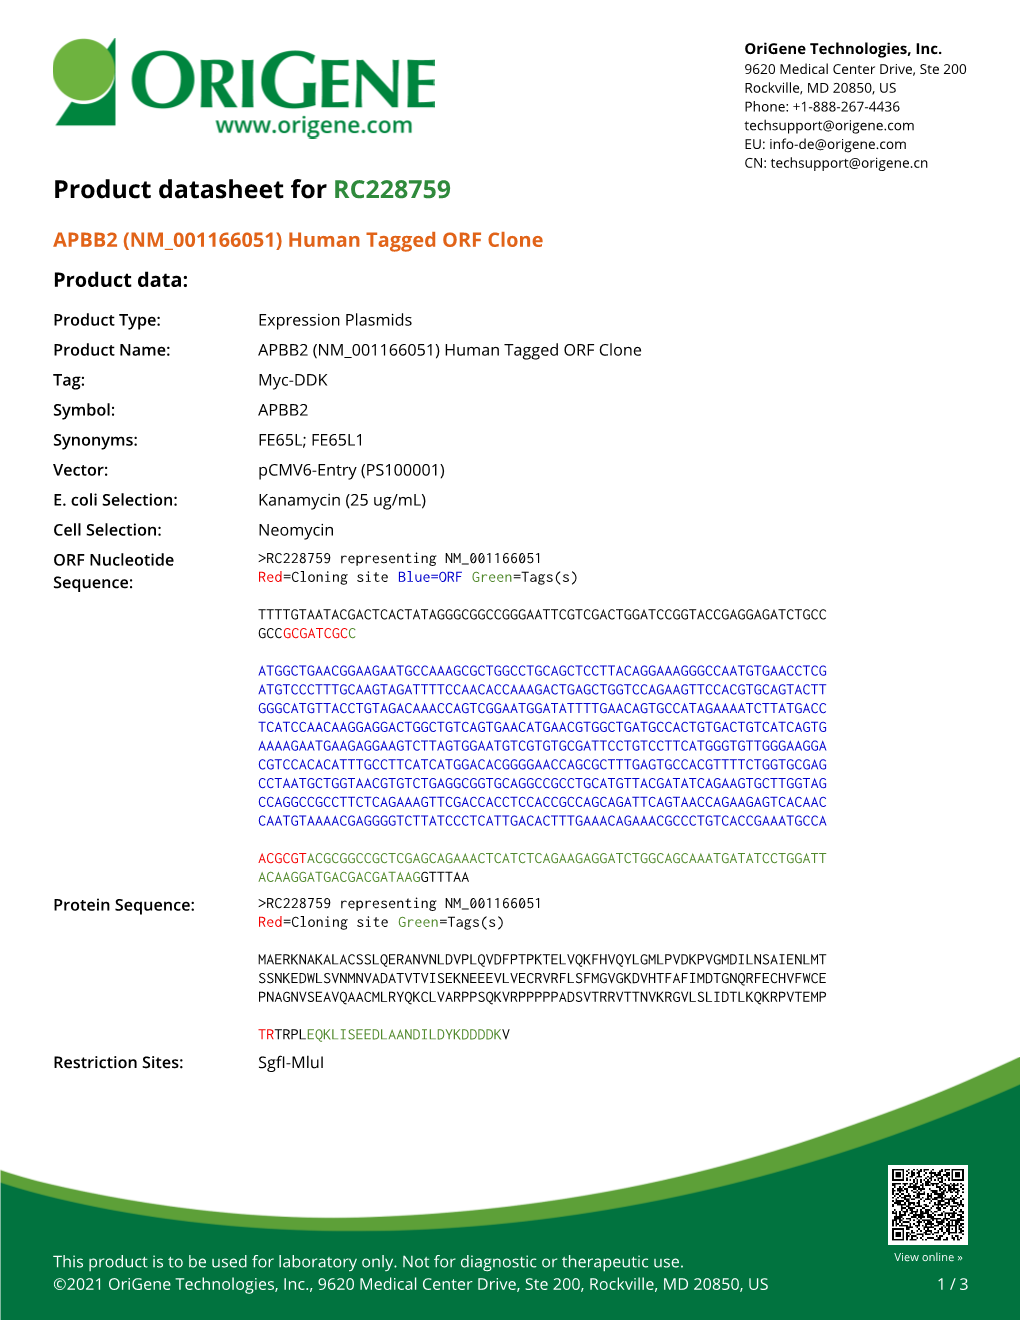 APBB2 (NM 001166051) Human Tagged ORF Clone Product Data